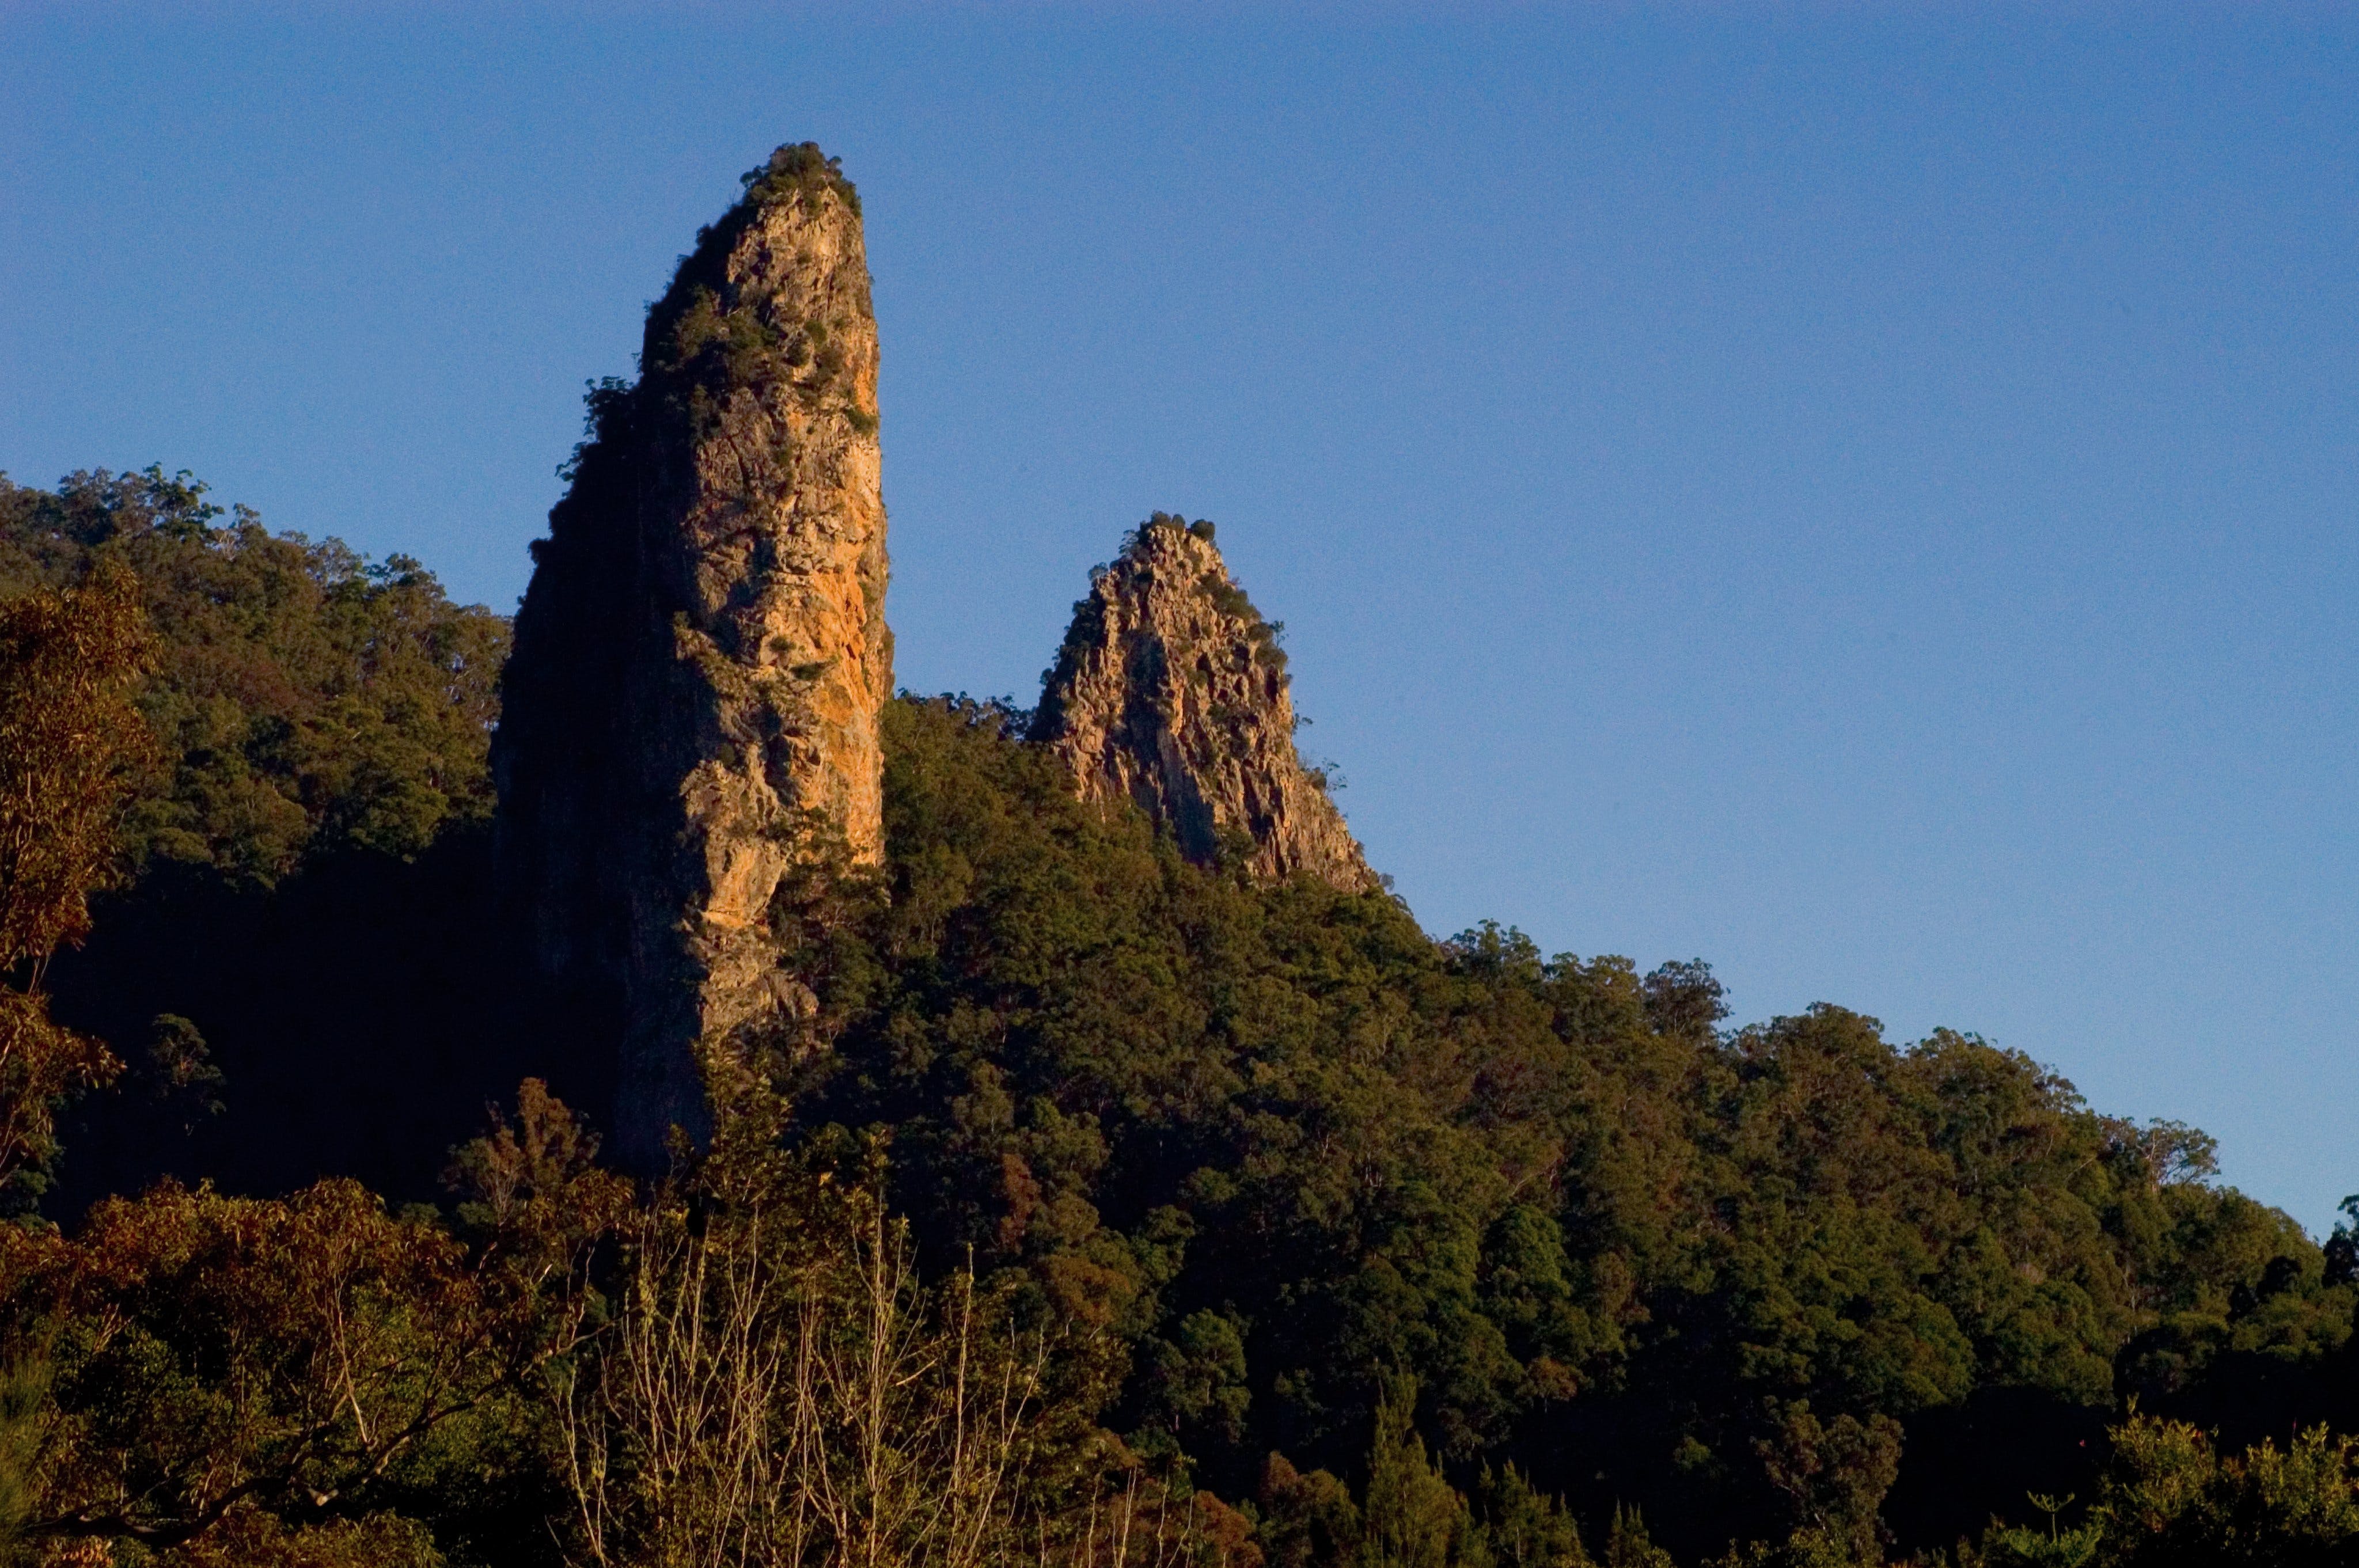 Nimbin Rocks - New South Wales Tourism 